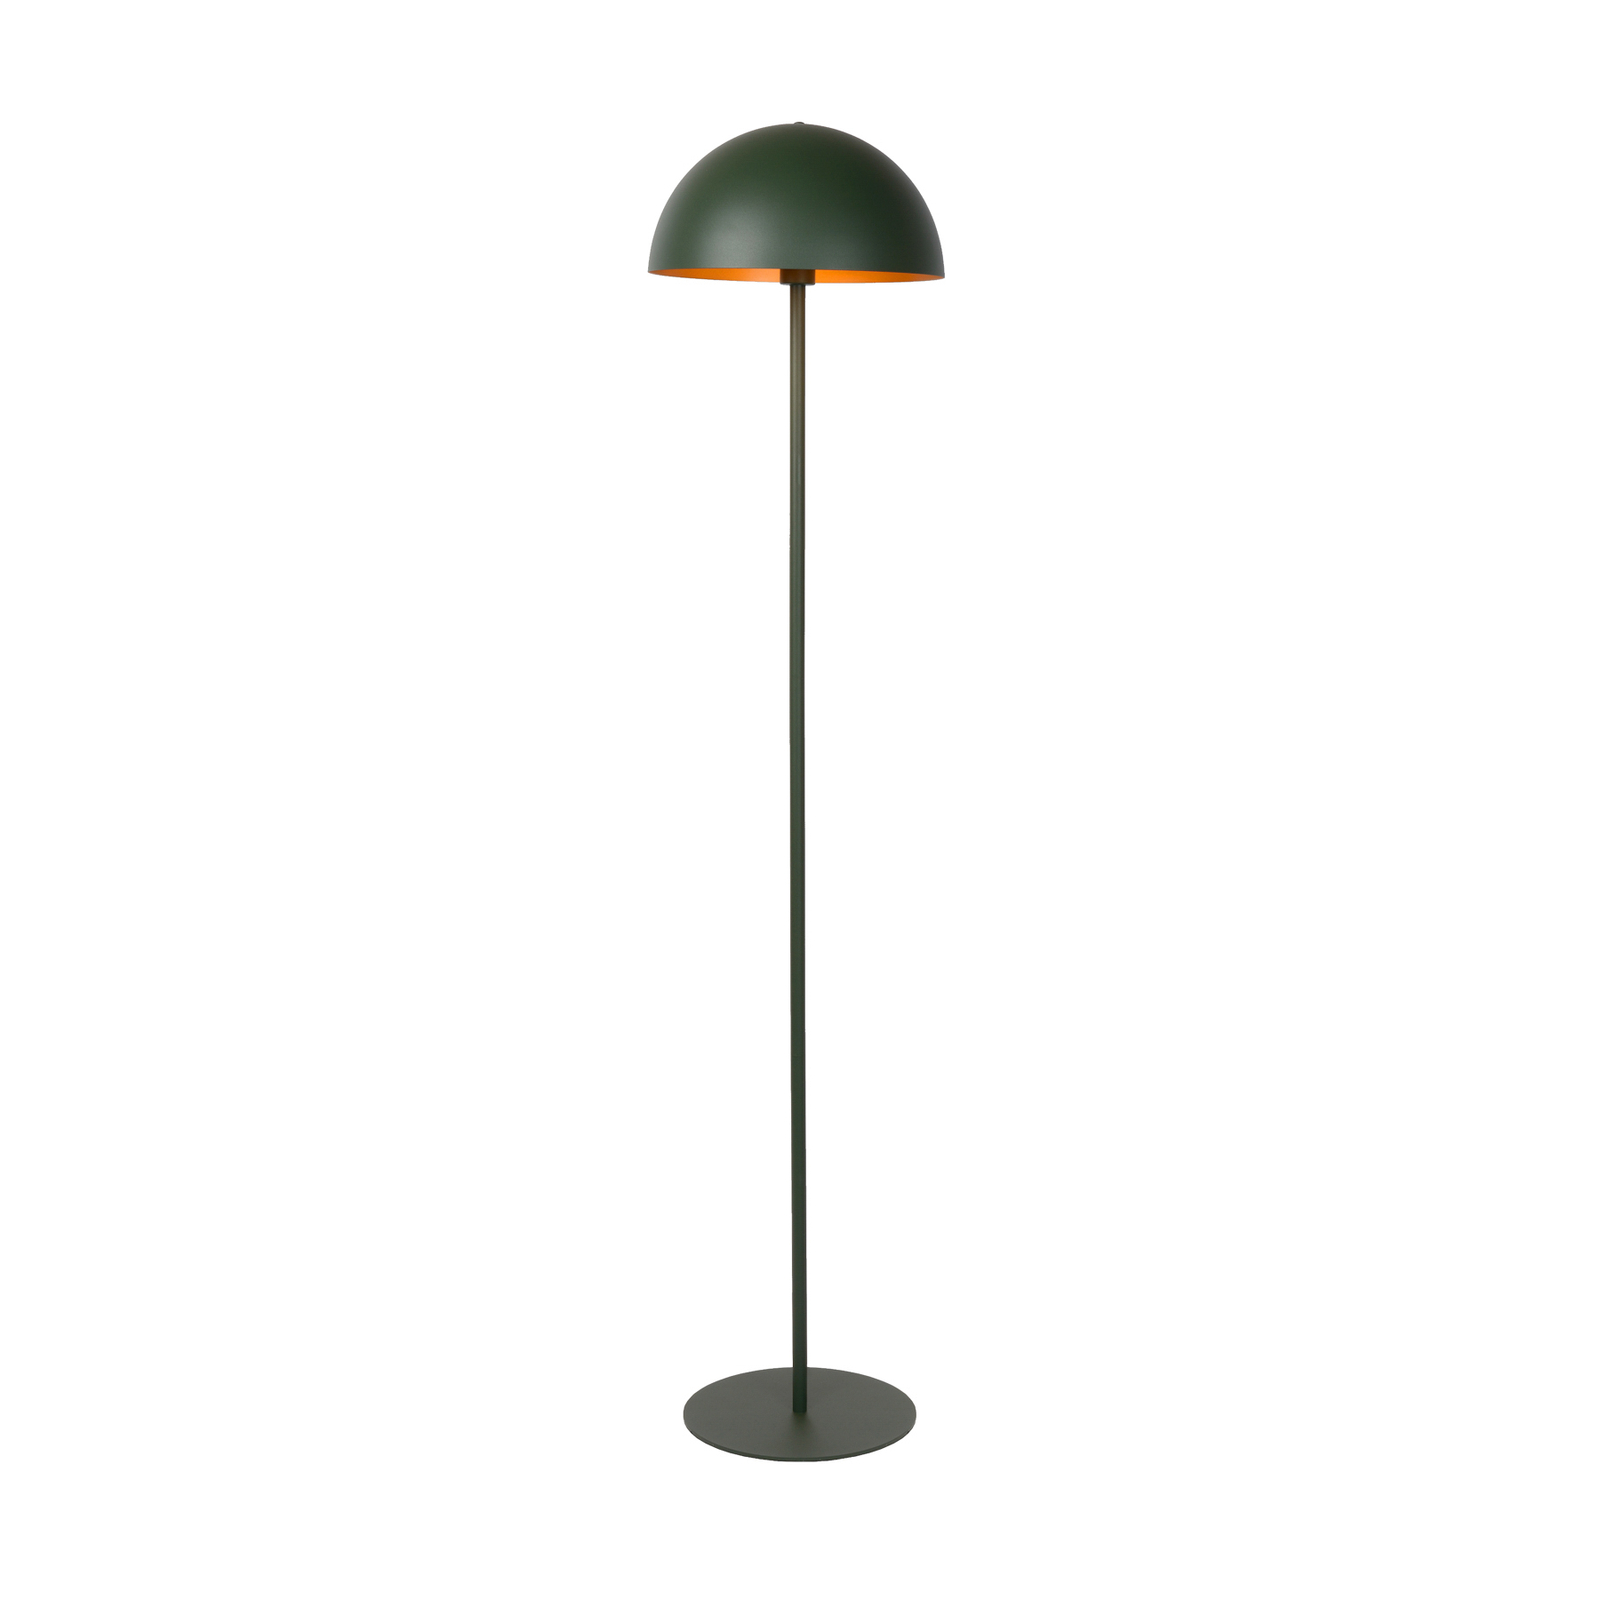 Siemon floor lamp made of steel, Ø 35 cm, green